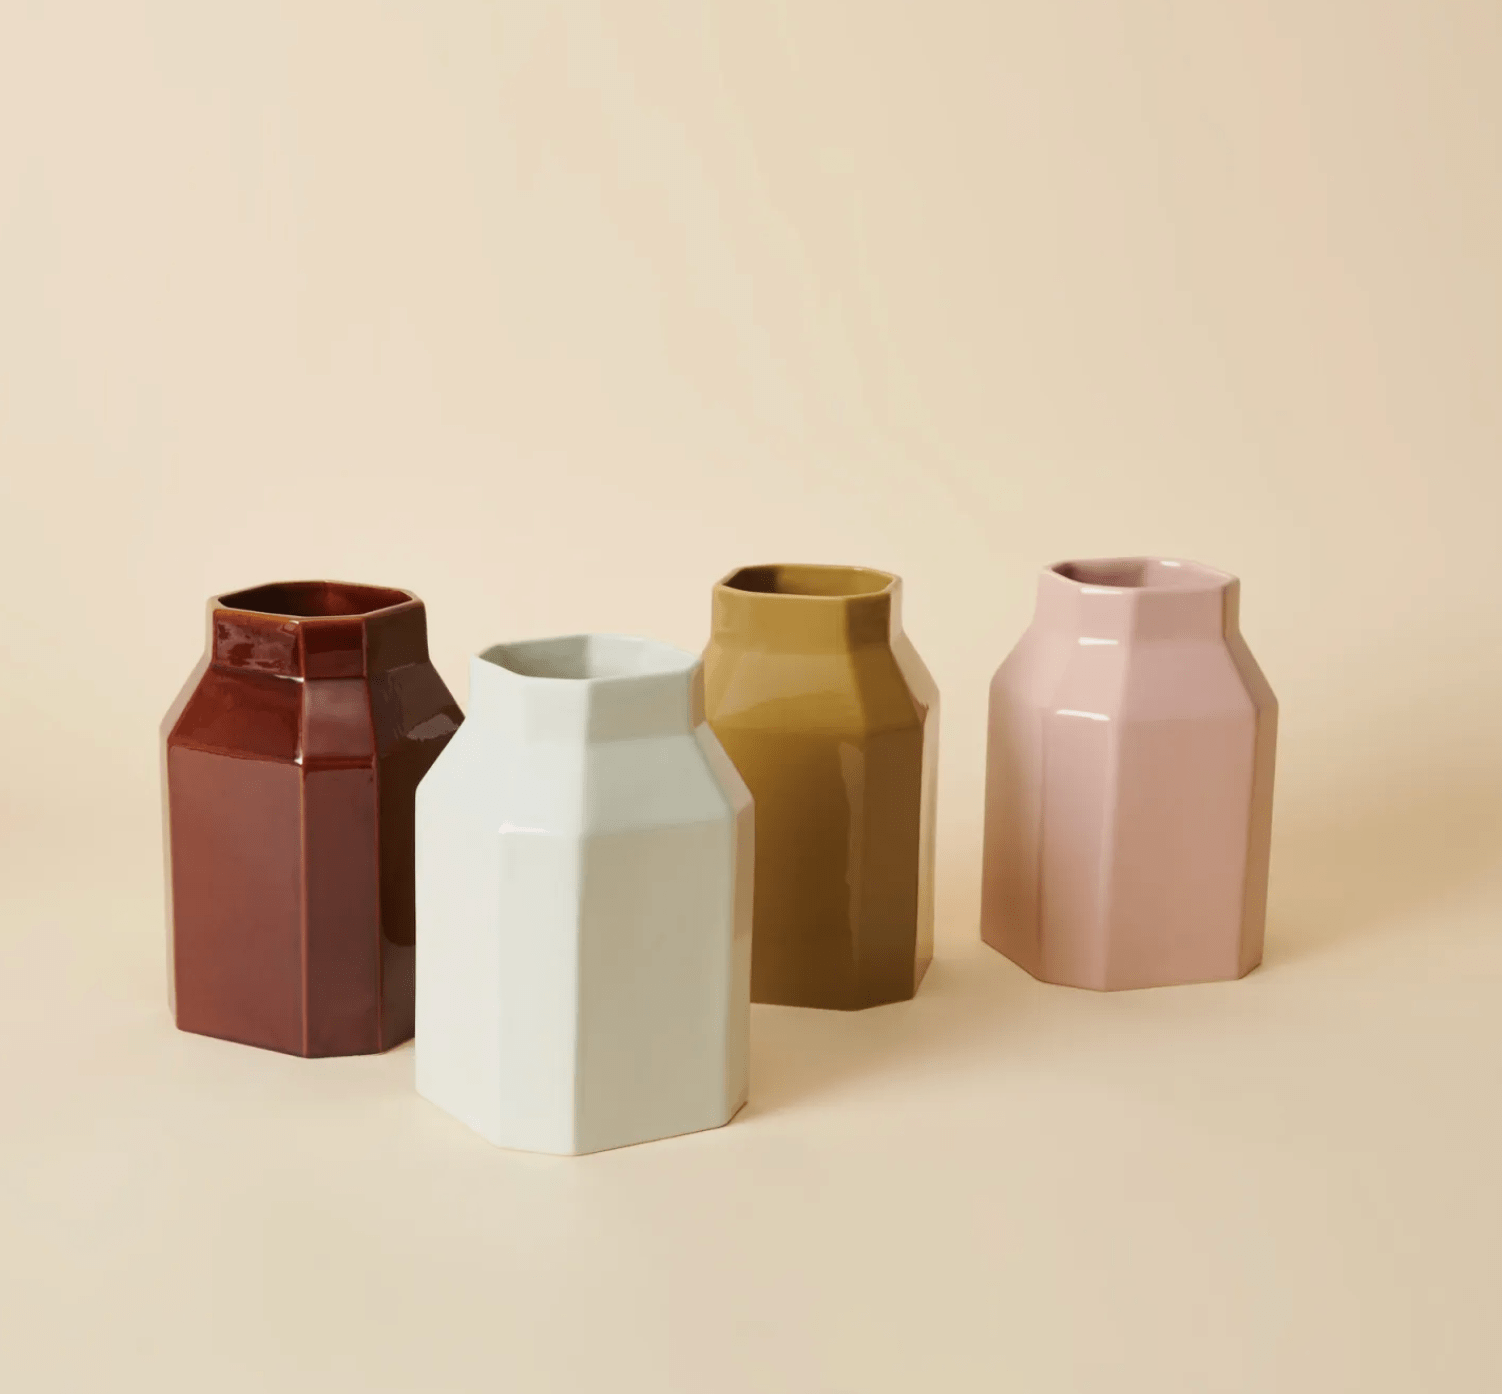 octagonal vases in coloured earthenware